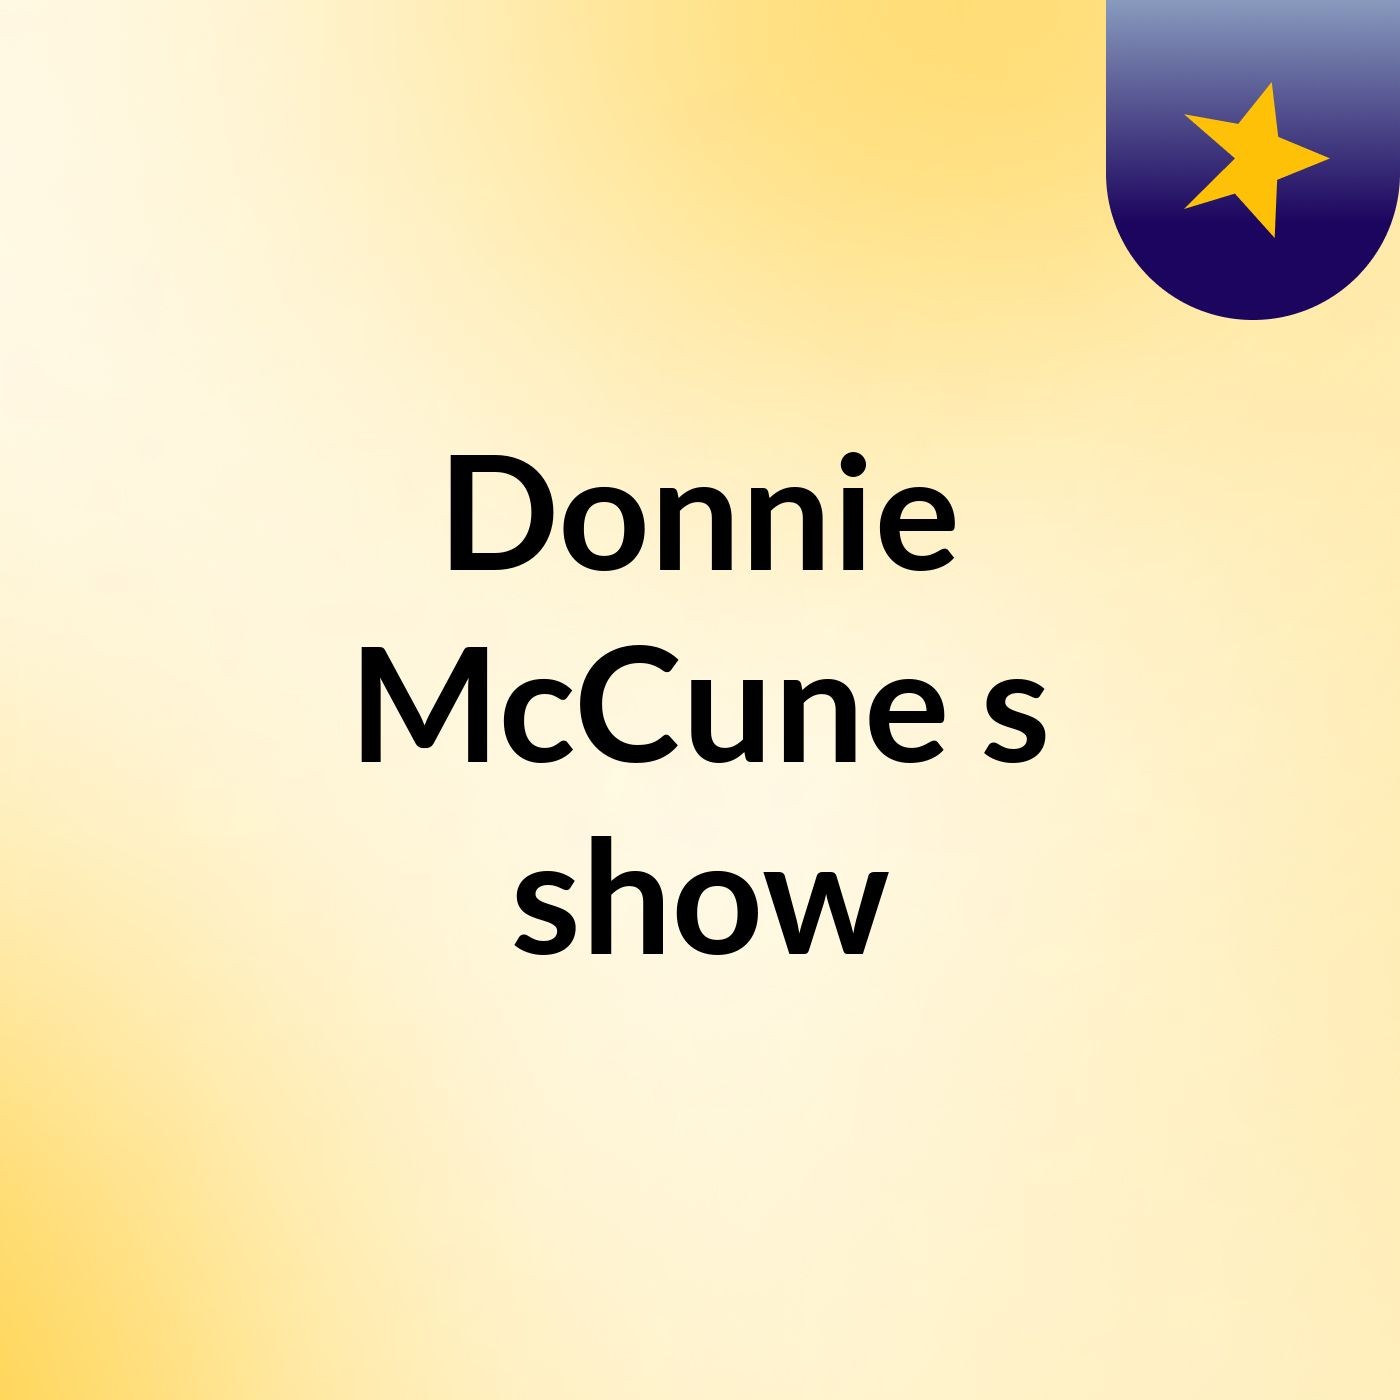 Donnie McCune's show